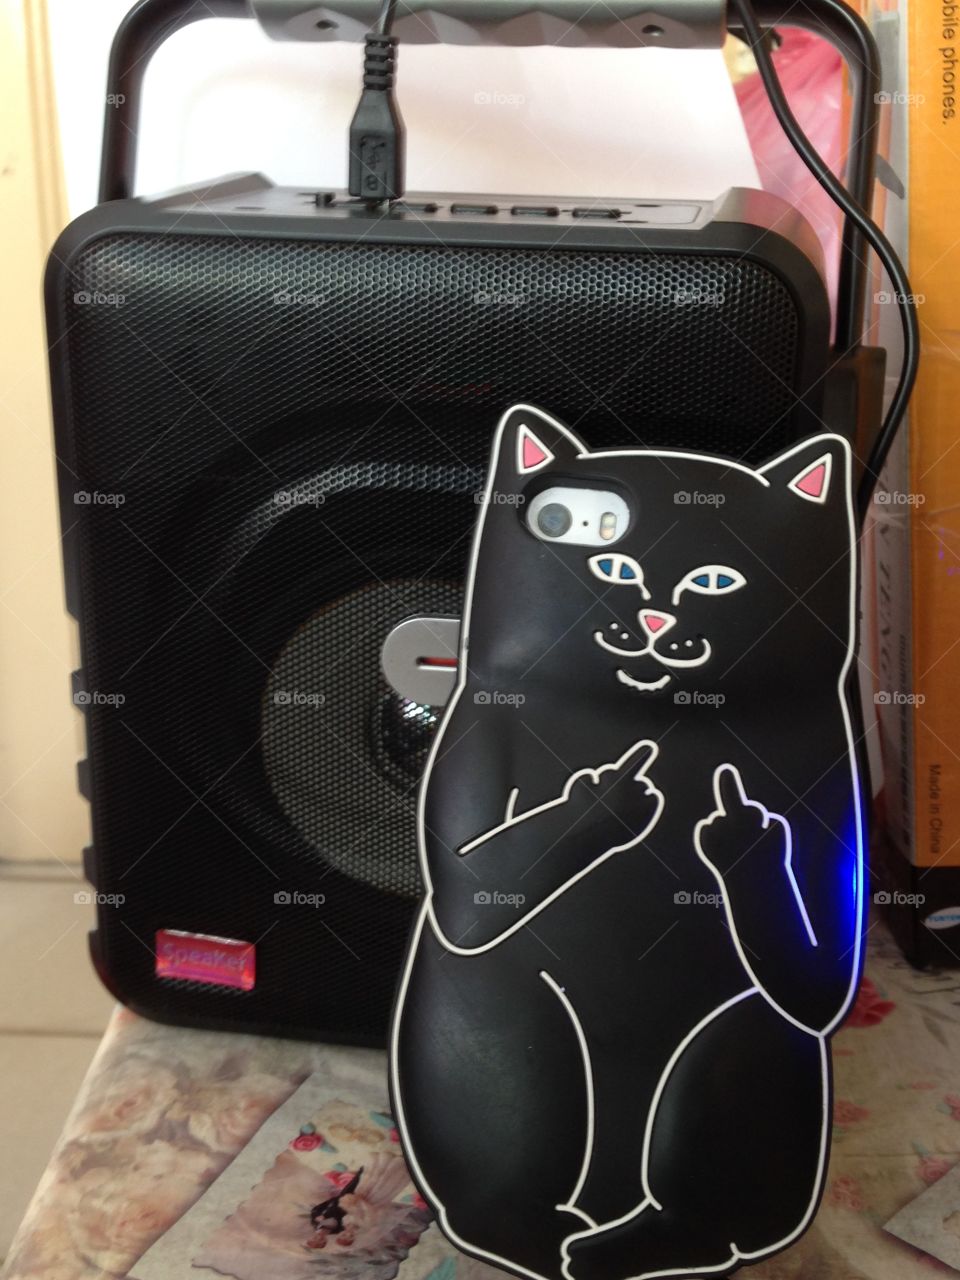 casing cat funny and speaker